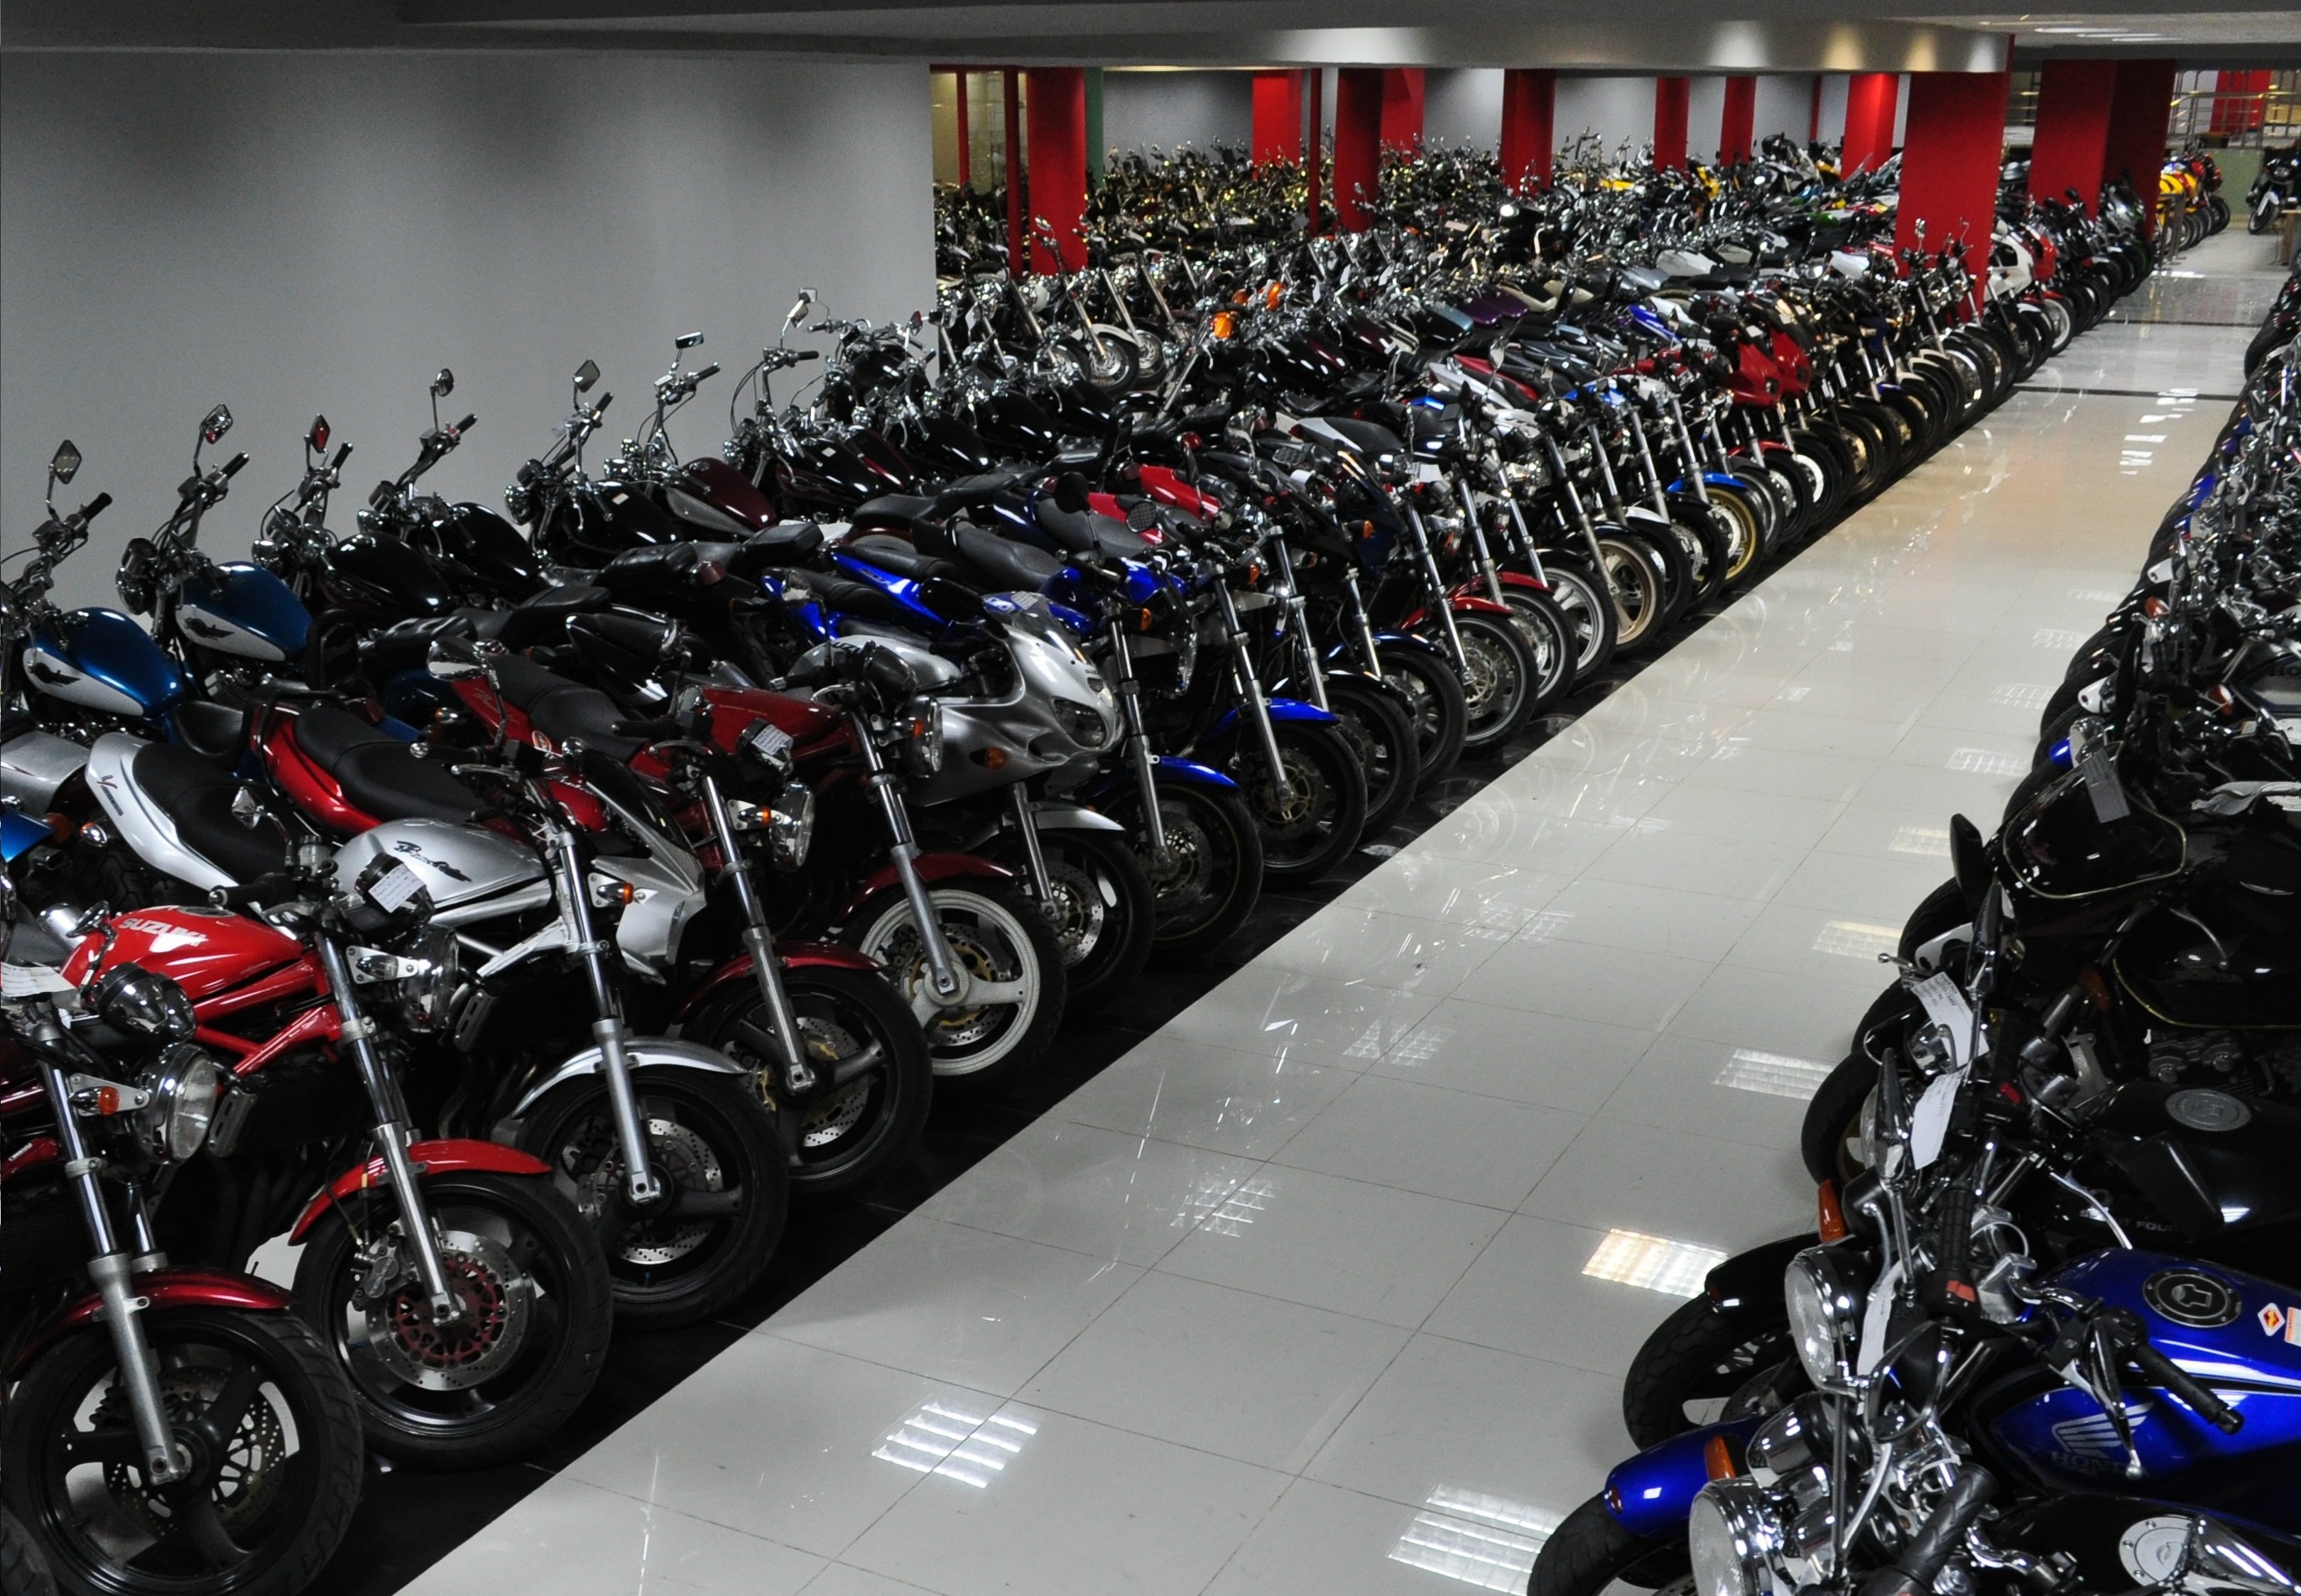 Найти магазин мотоциклы. Магазин мотоциклов. Мото рынок. Магазин мототехники. Много мотоциклов.